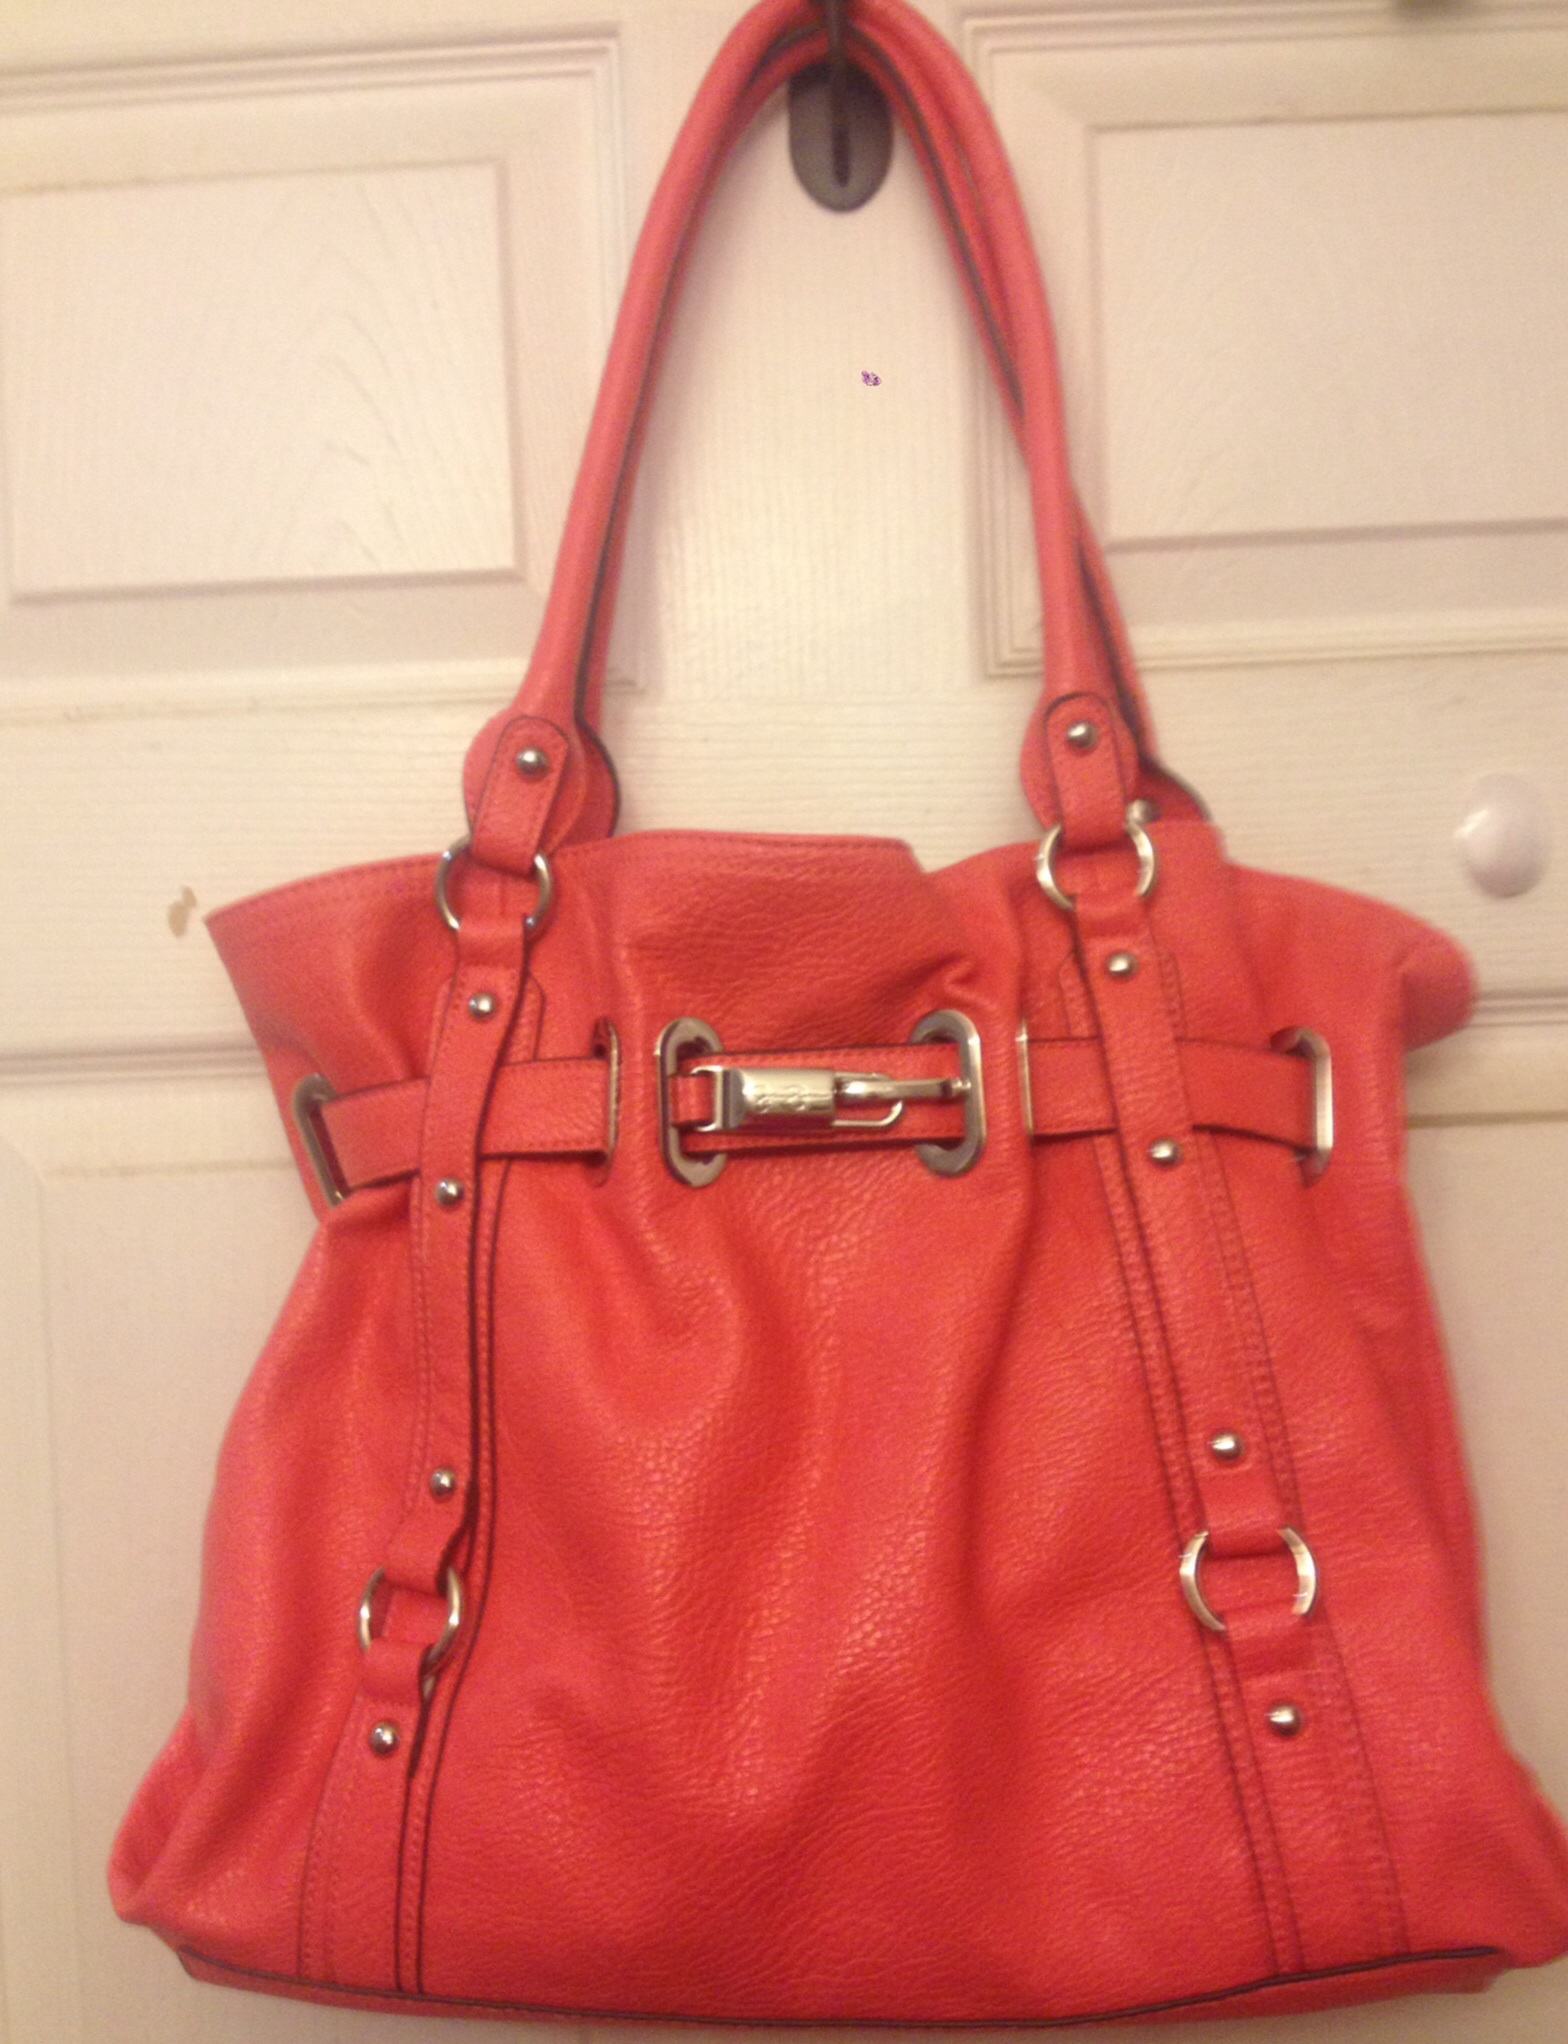 Jessica Simpson handbag in Courtney_co's Garage Sale Brownwood, TX